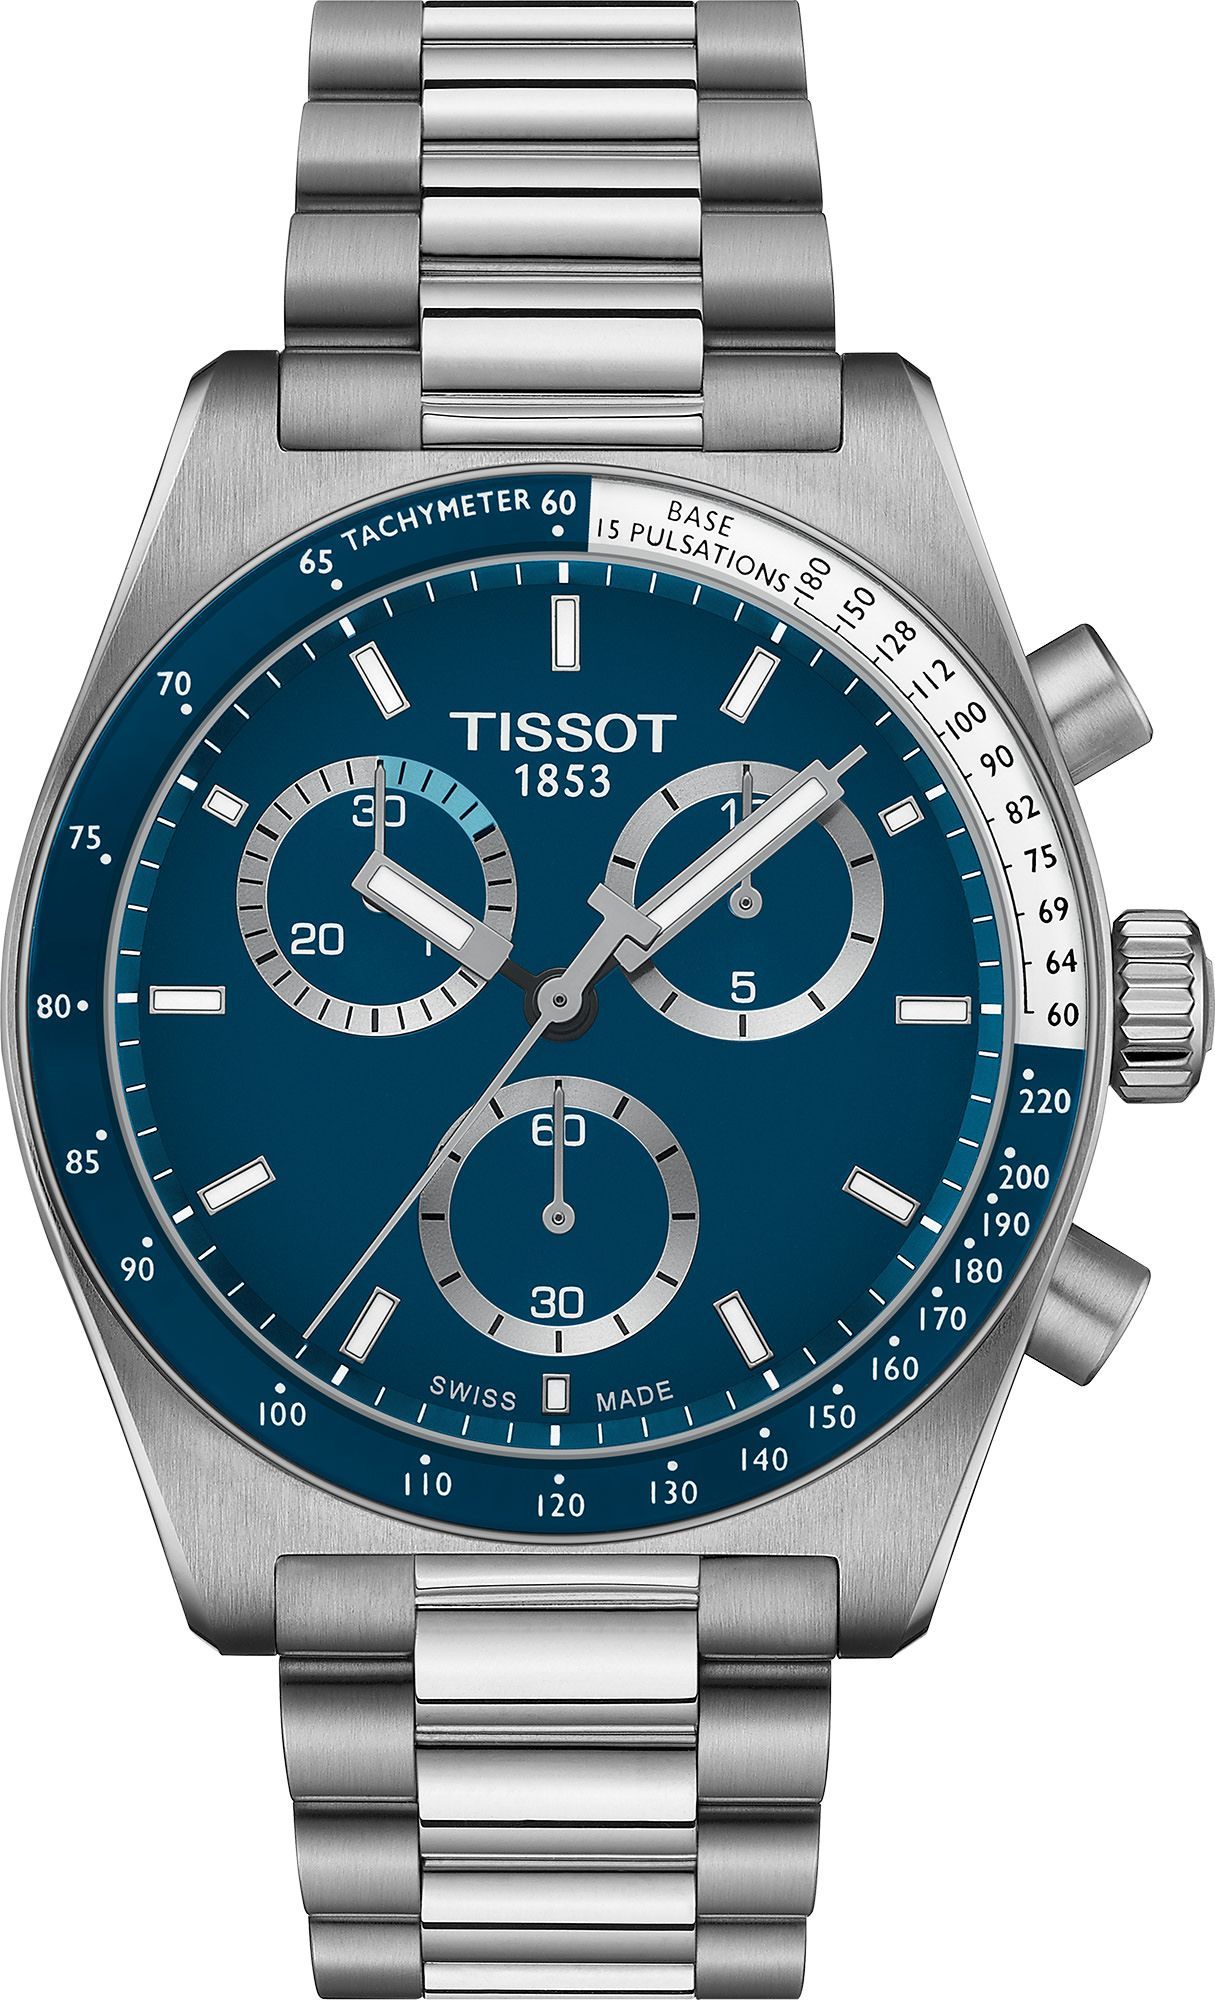 Tissot T-Sport Tissot PR516 Blue Dial 40 mm Quartz Watch For Men - 1